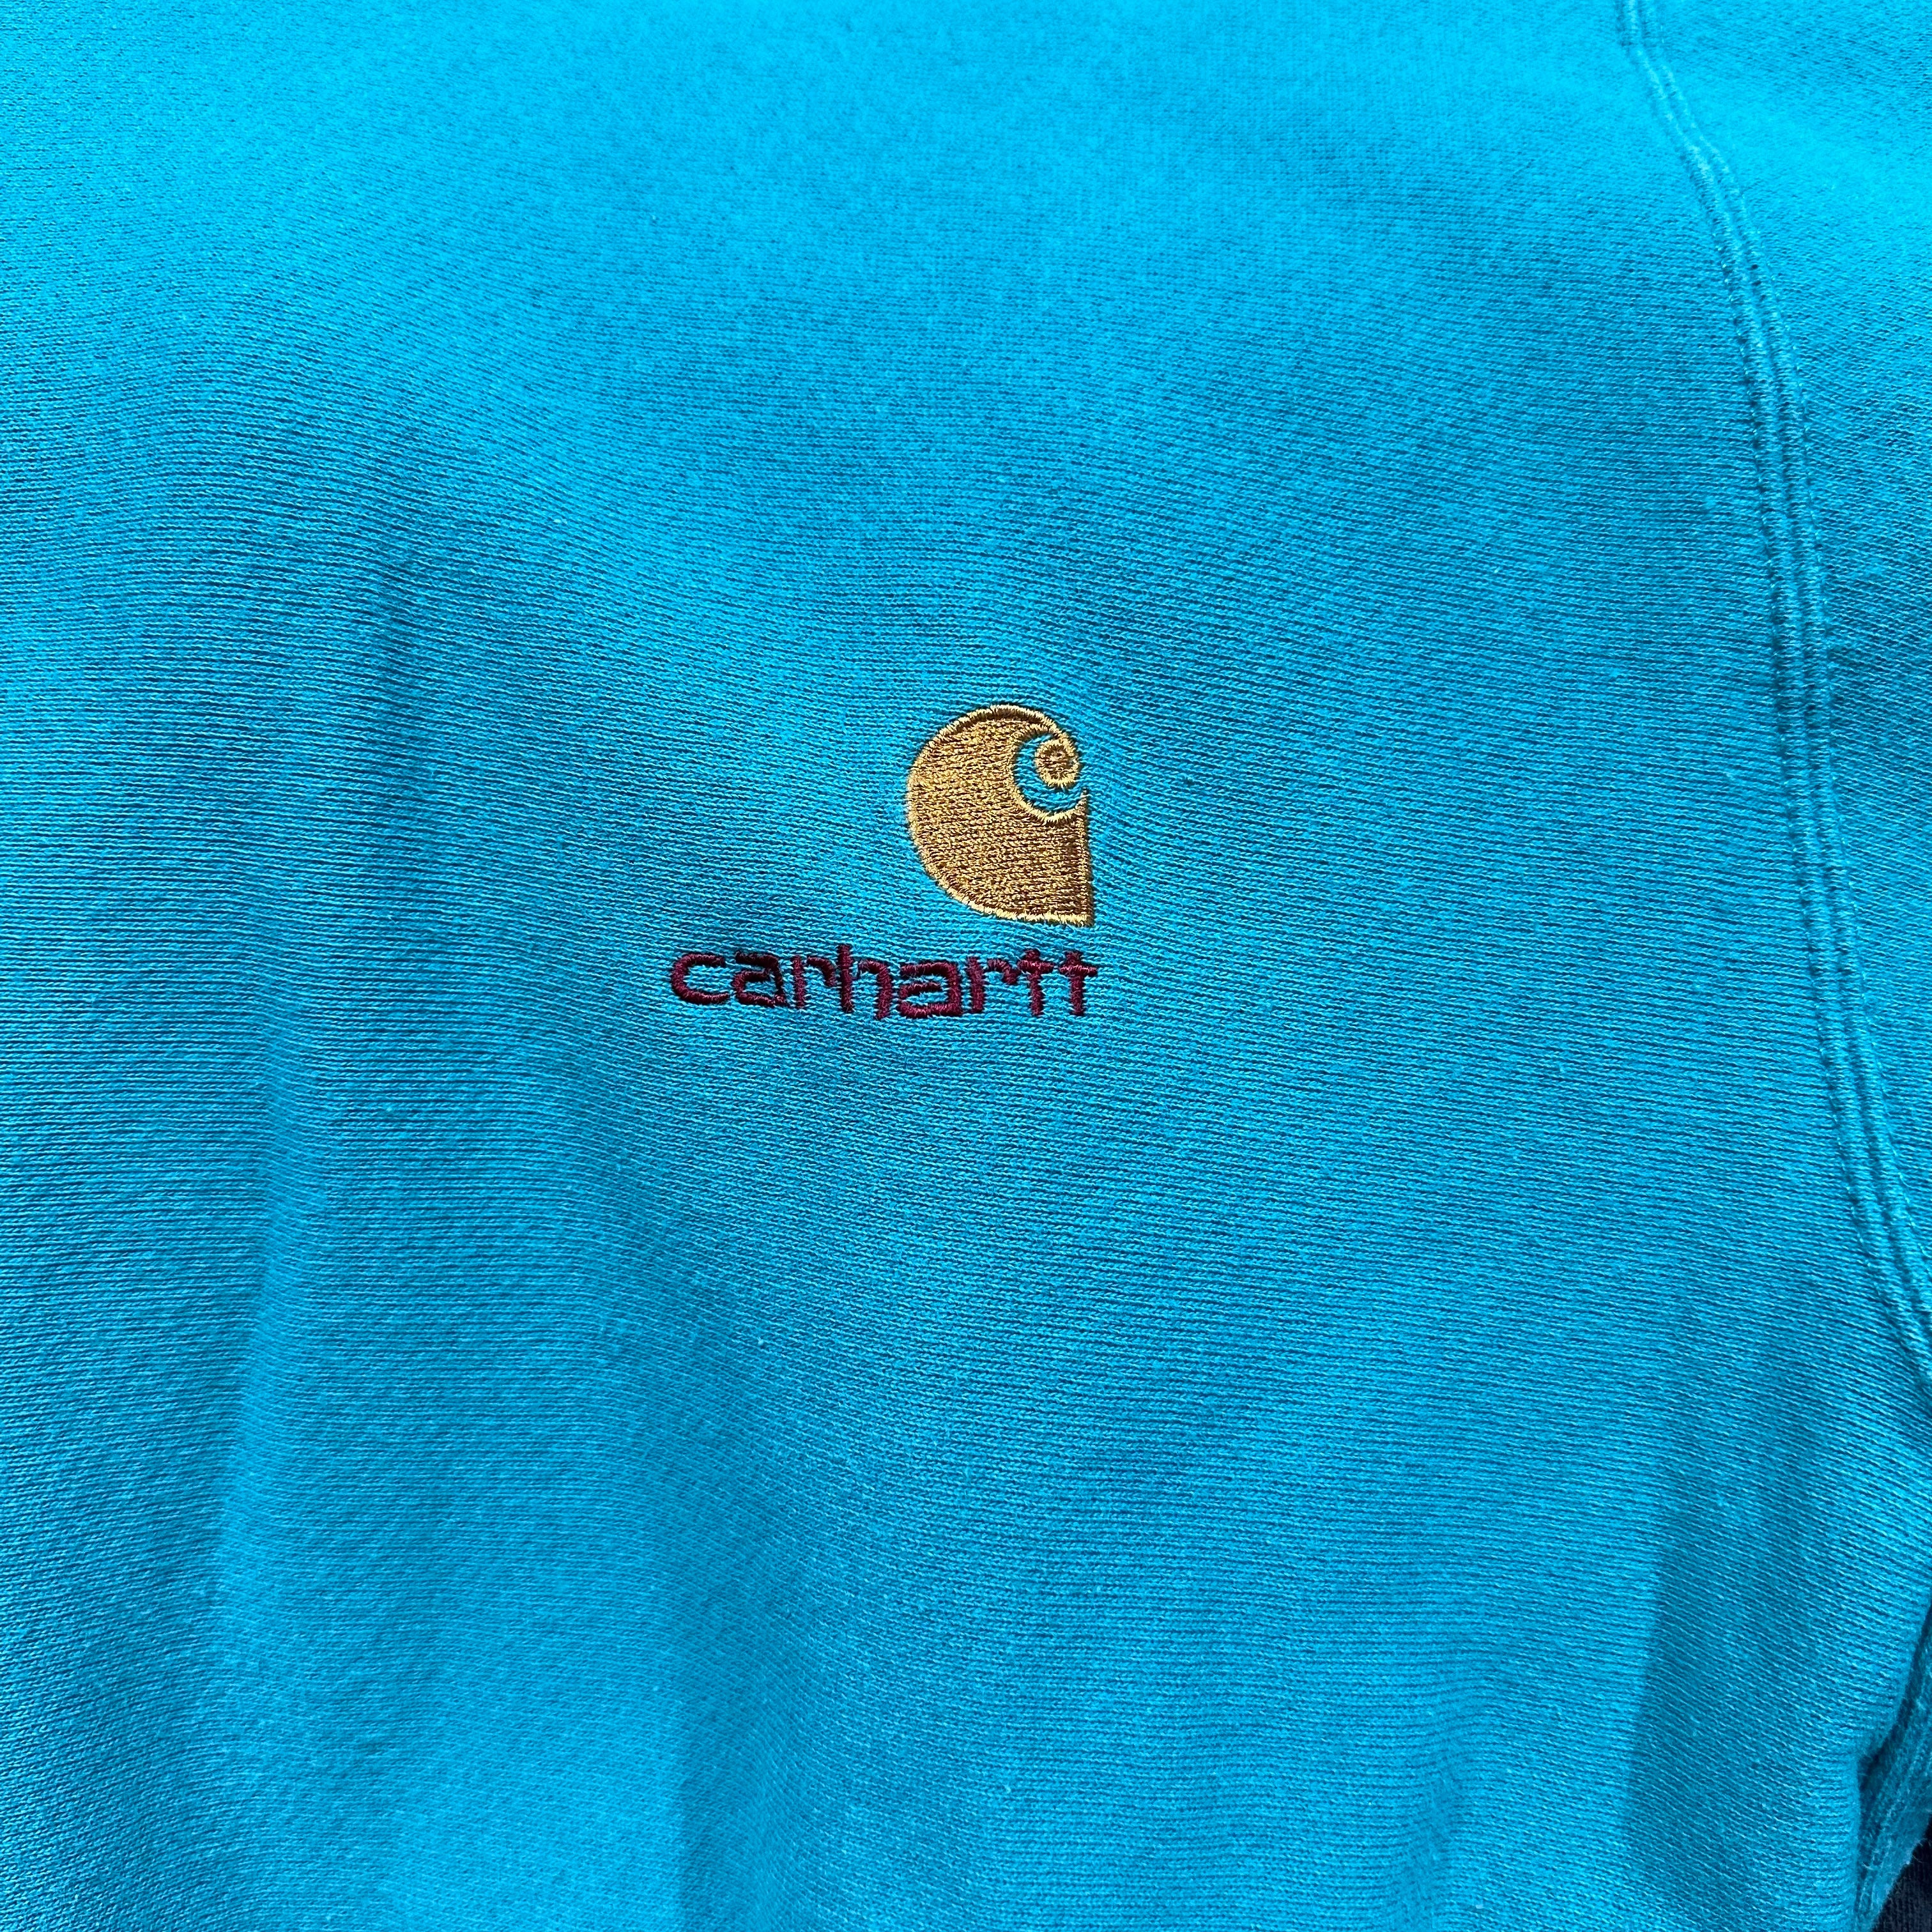 Carhartt Teal Reverse Weave Crewneck Sweatshirt